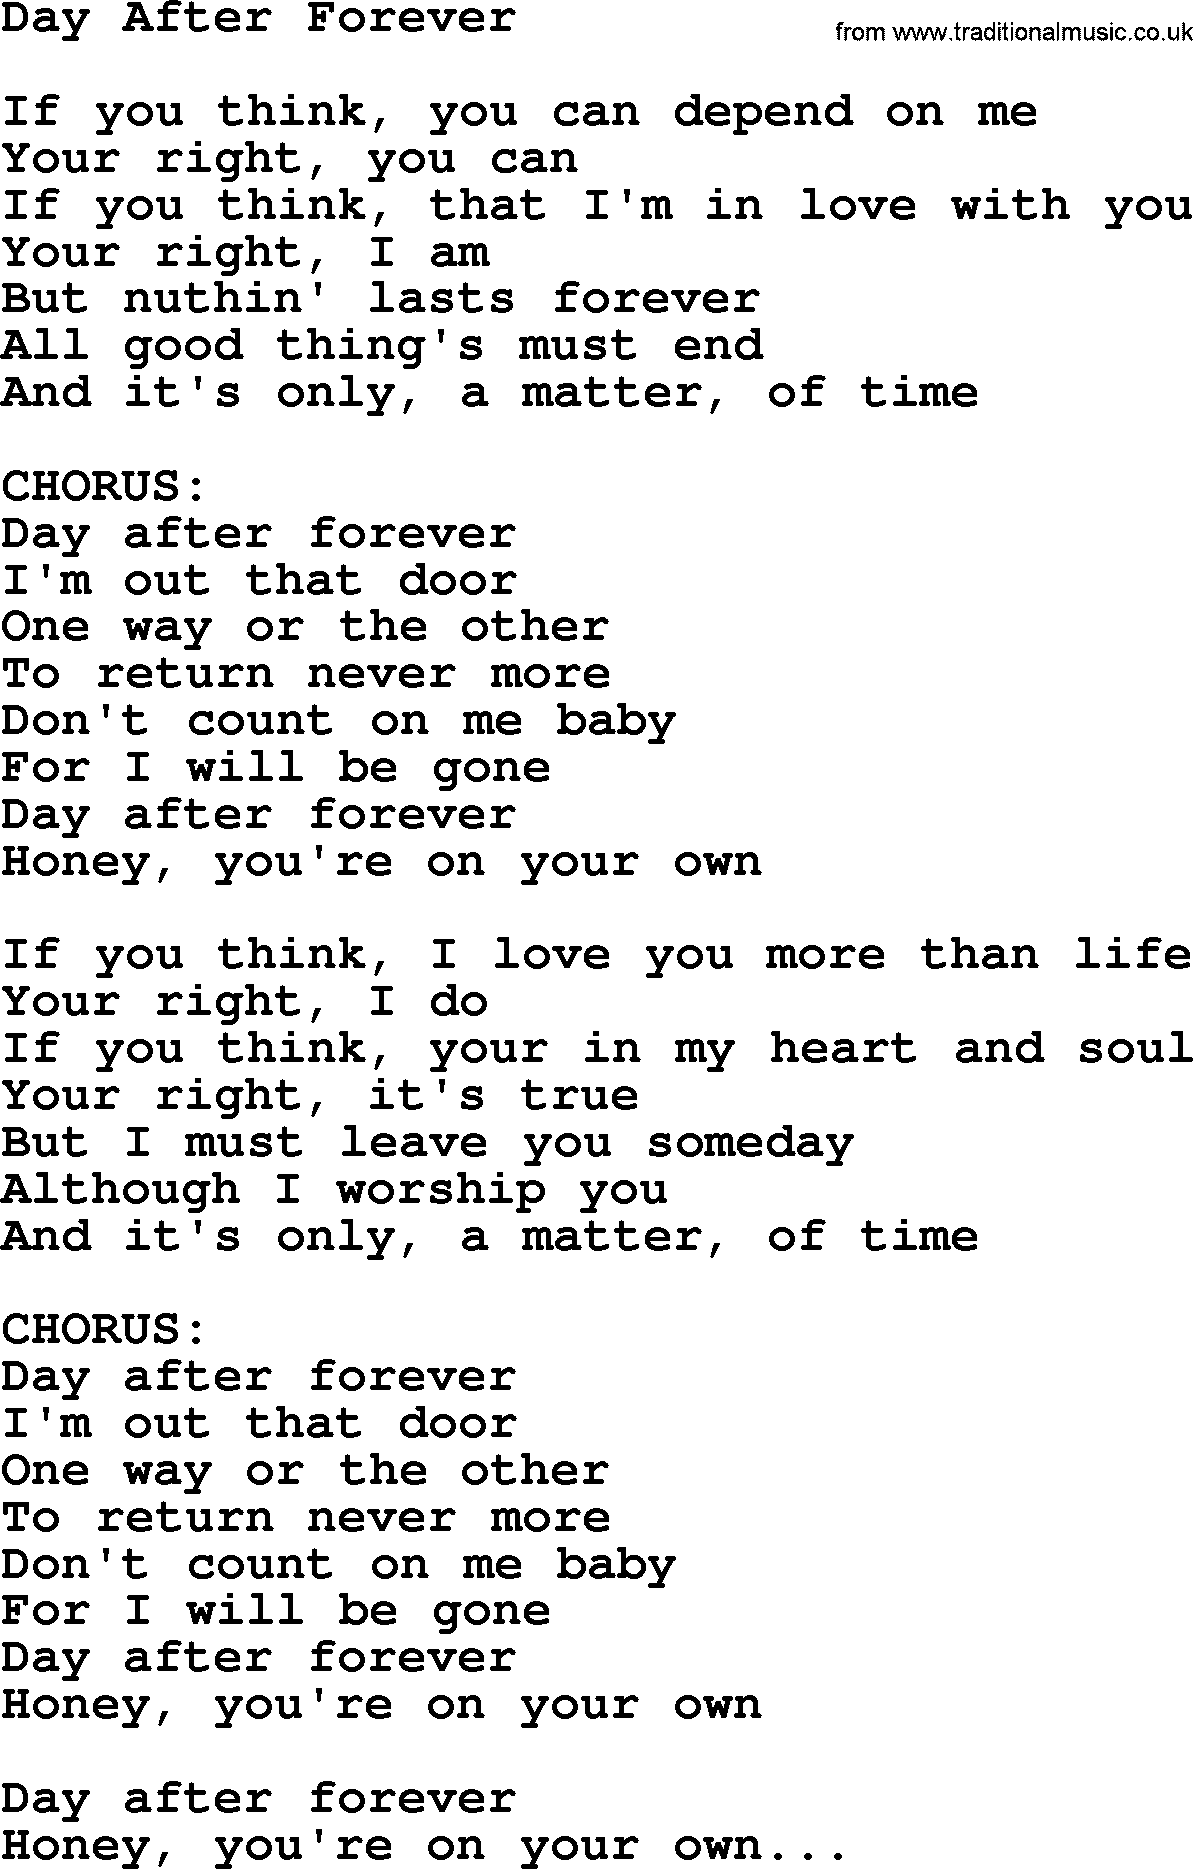 George Jones song: Day After Forever, lyrics